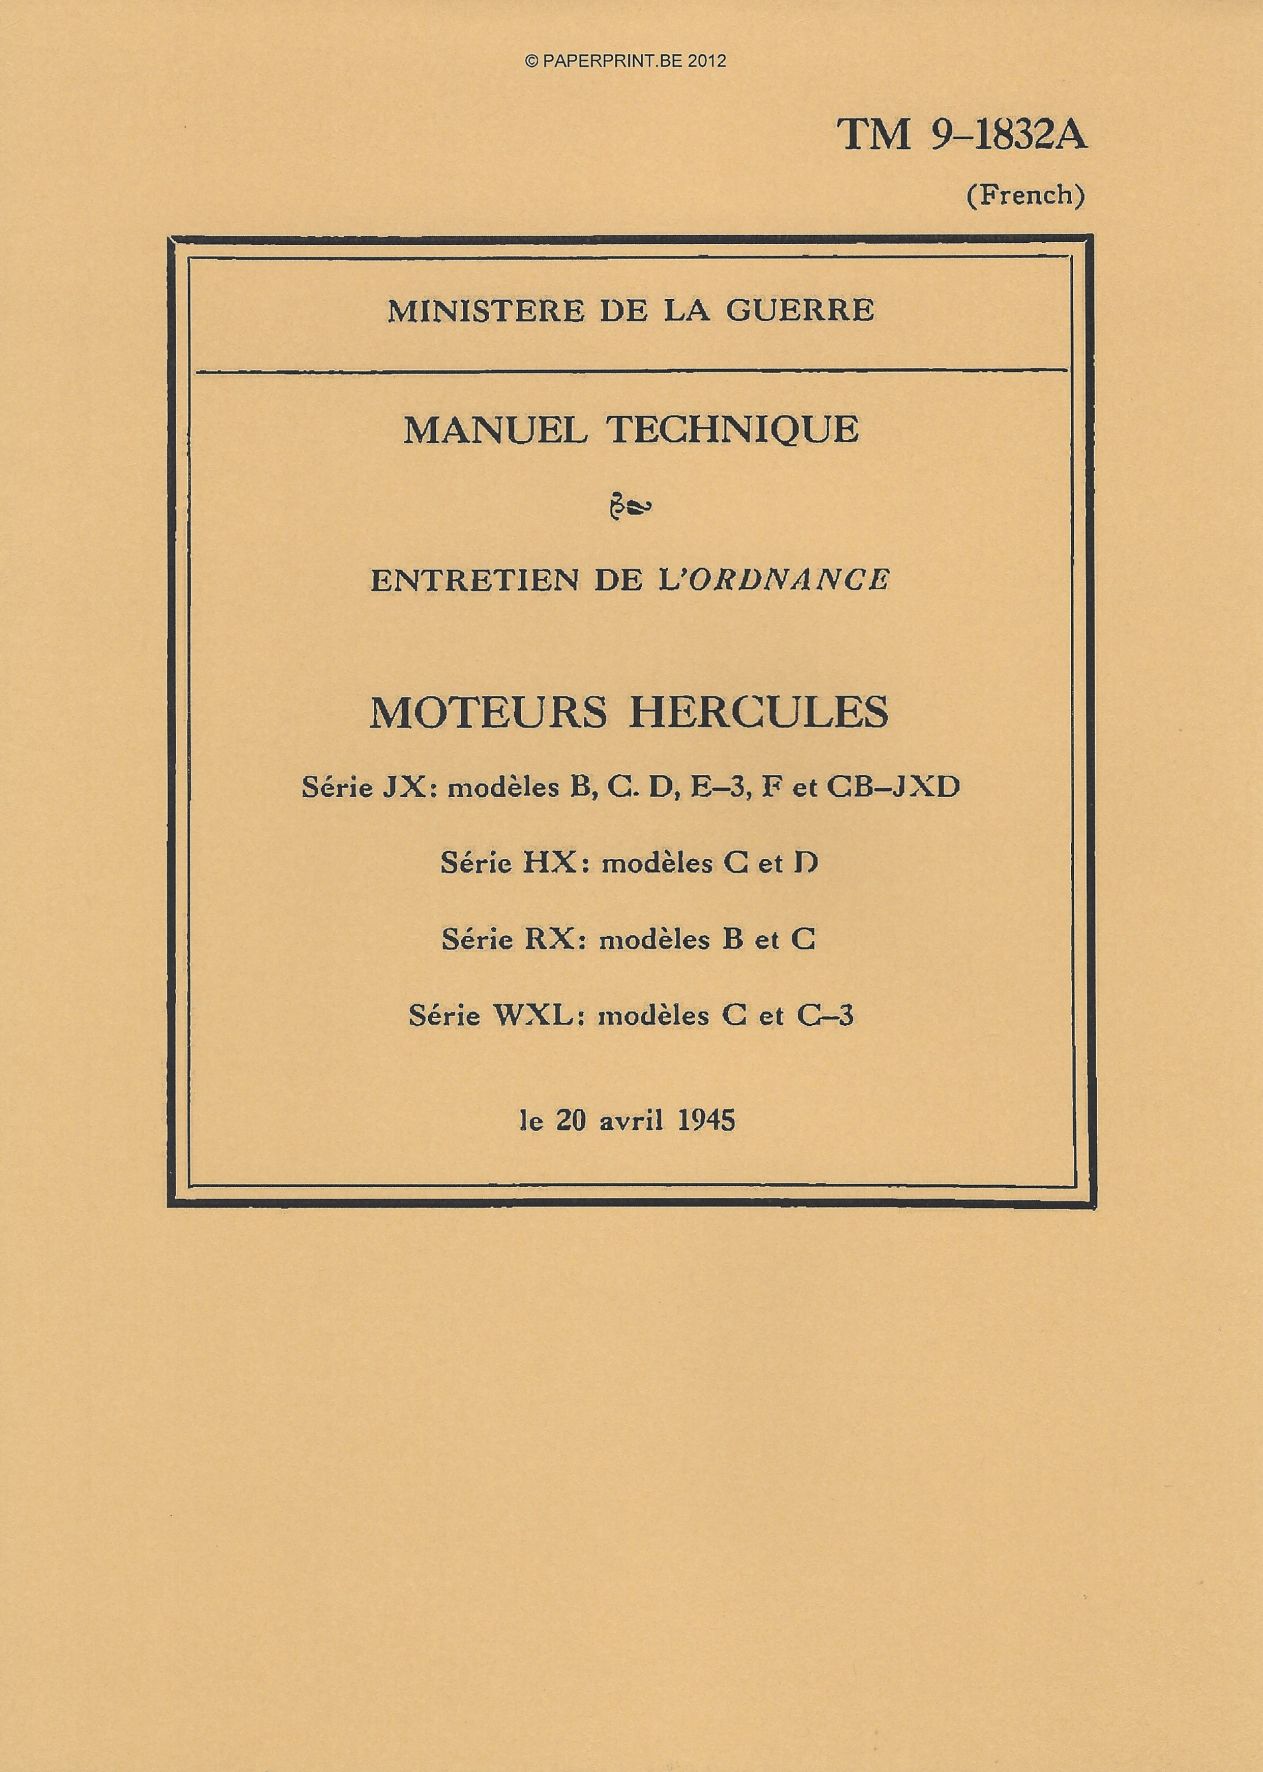 TM 9-1832A FR MOTEURS HERCULES